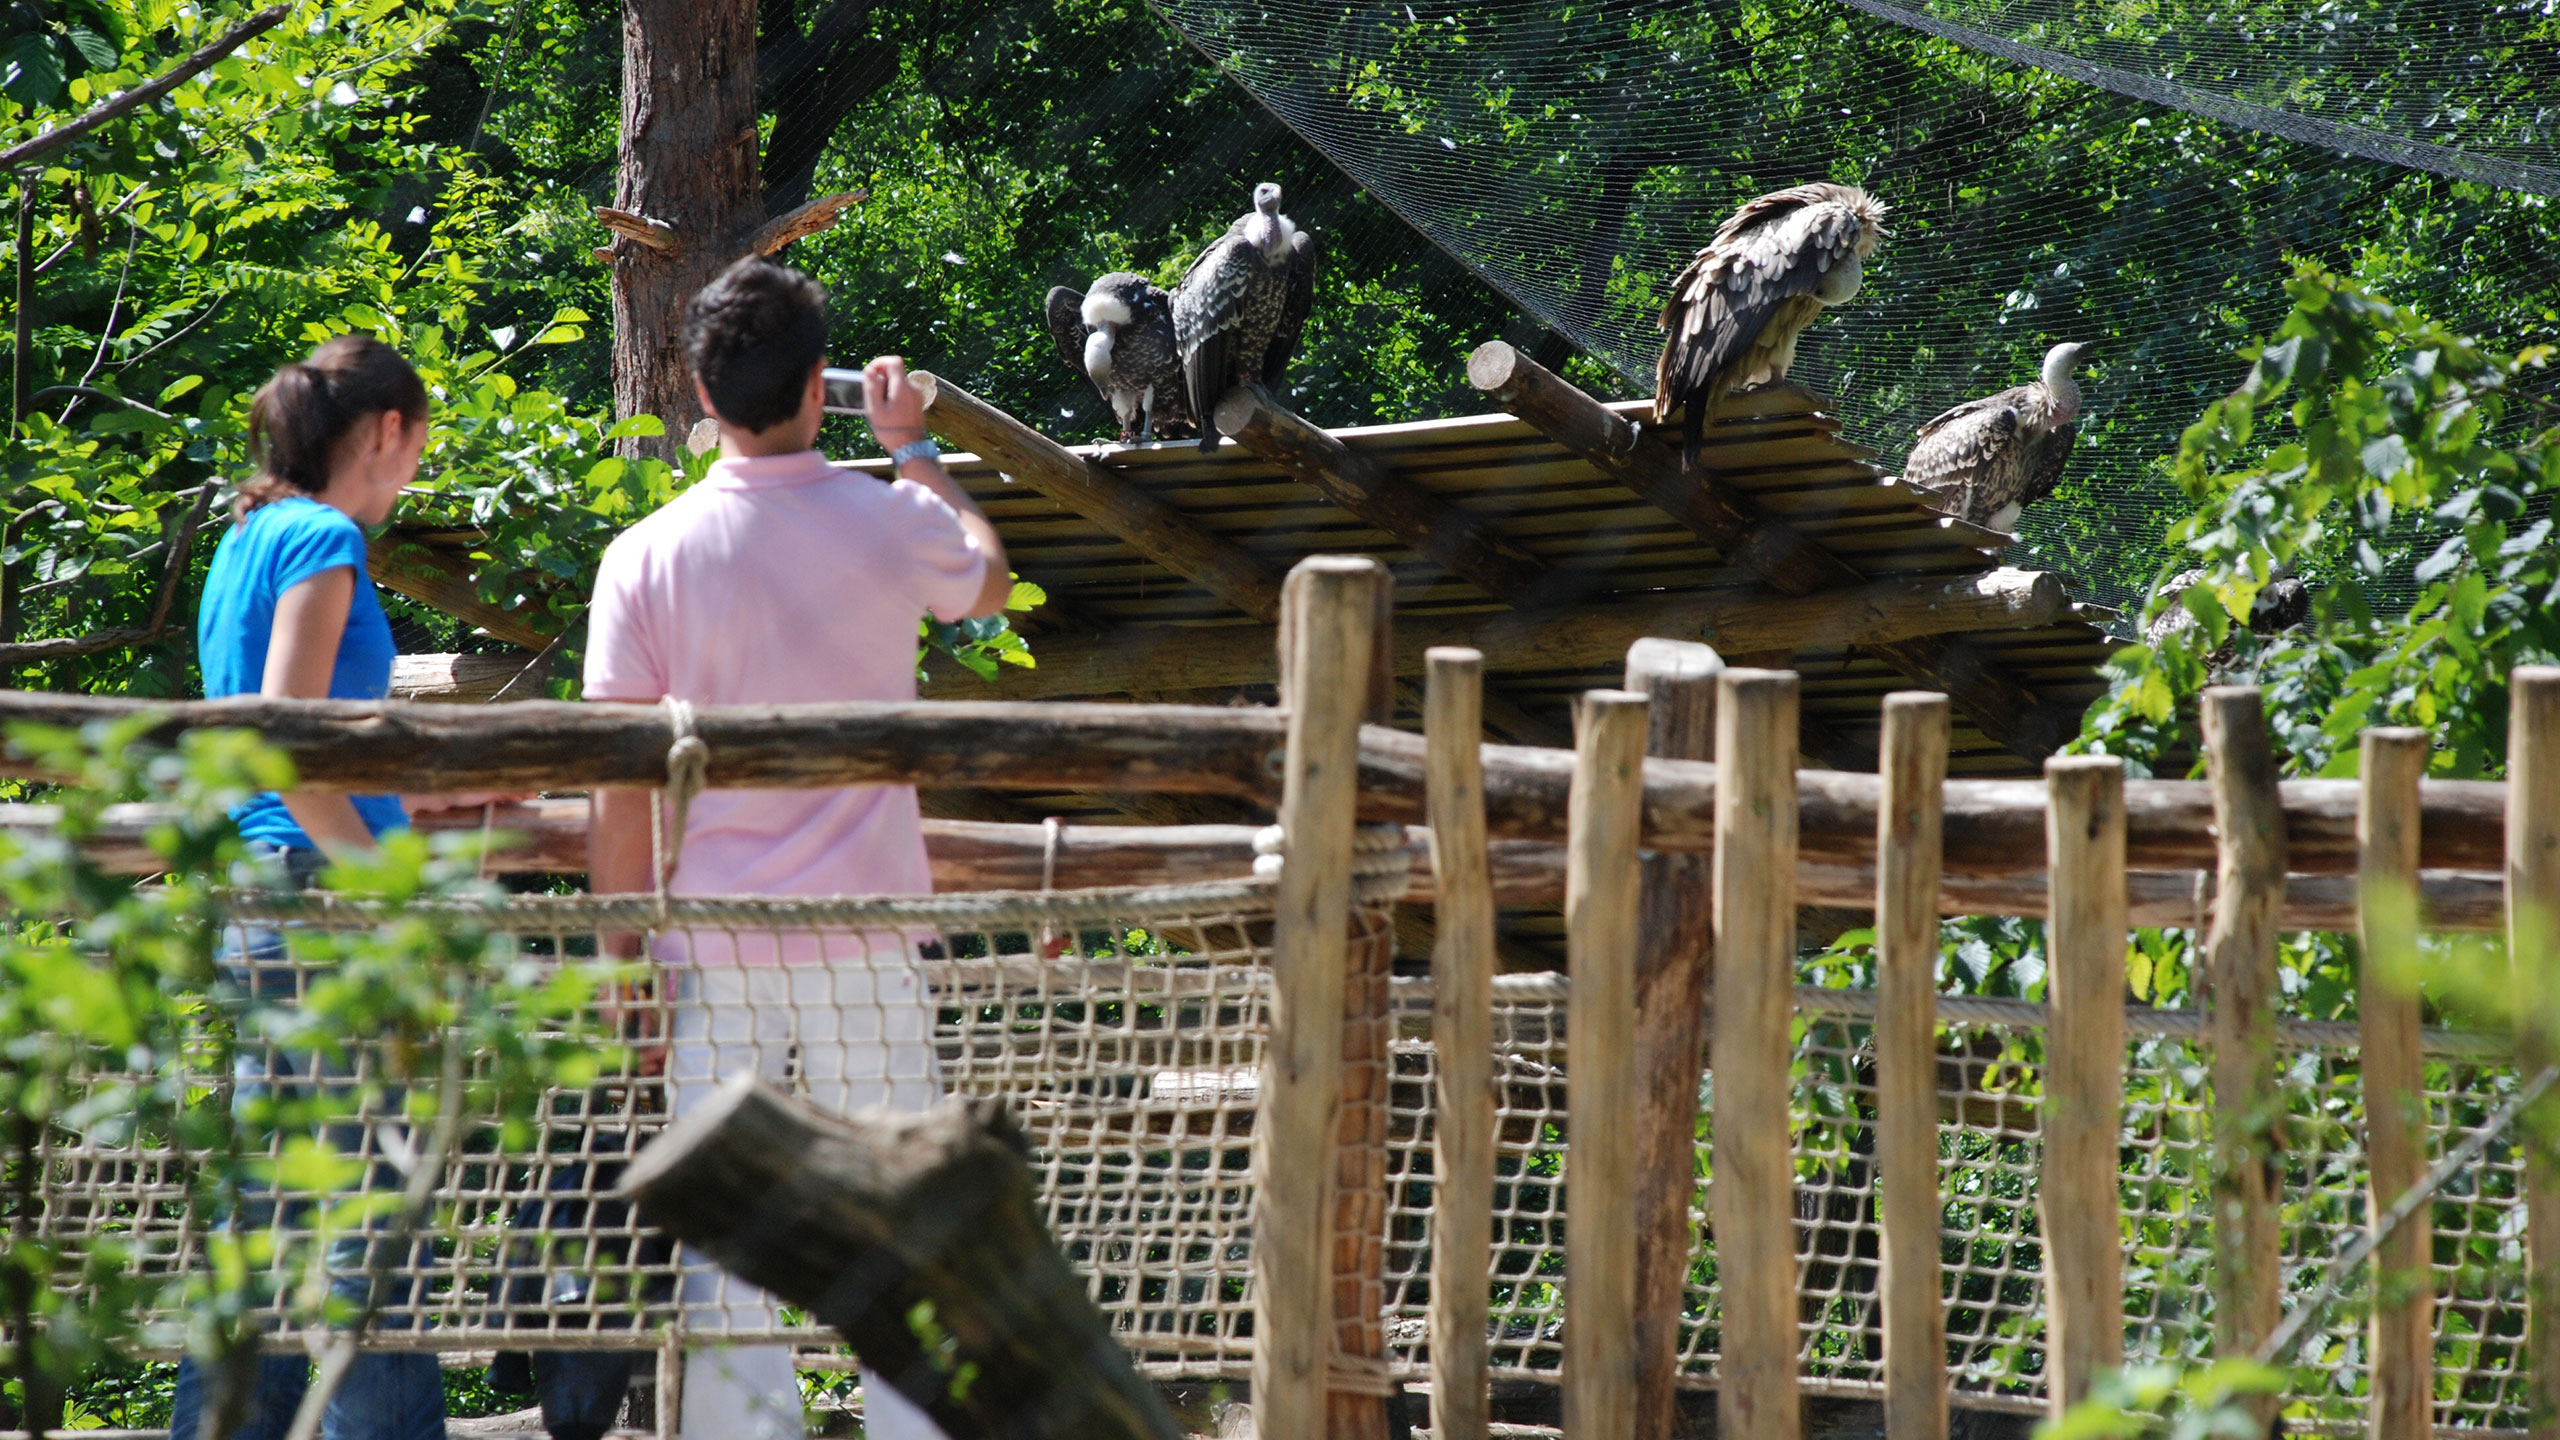 Vulture aviary